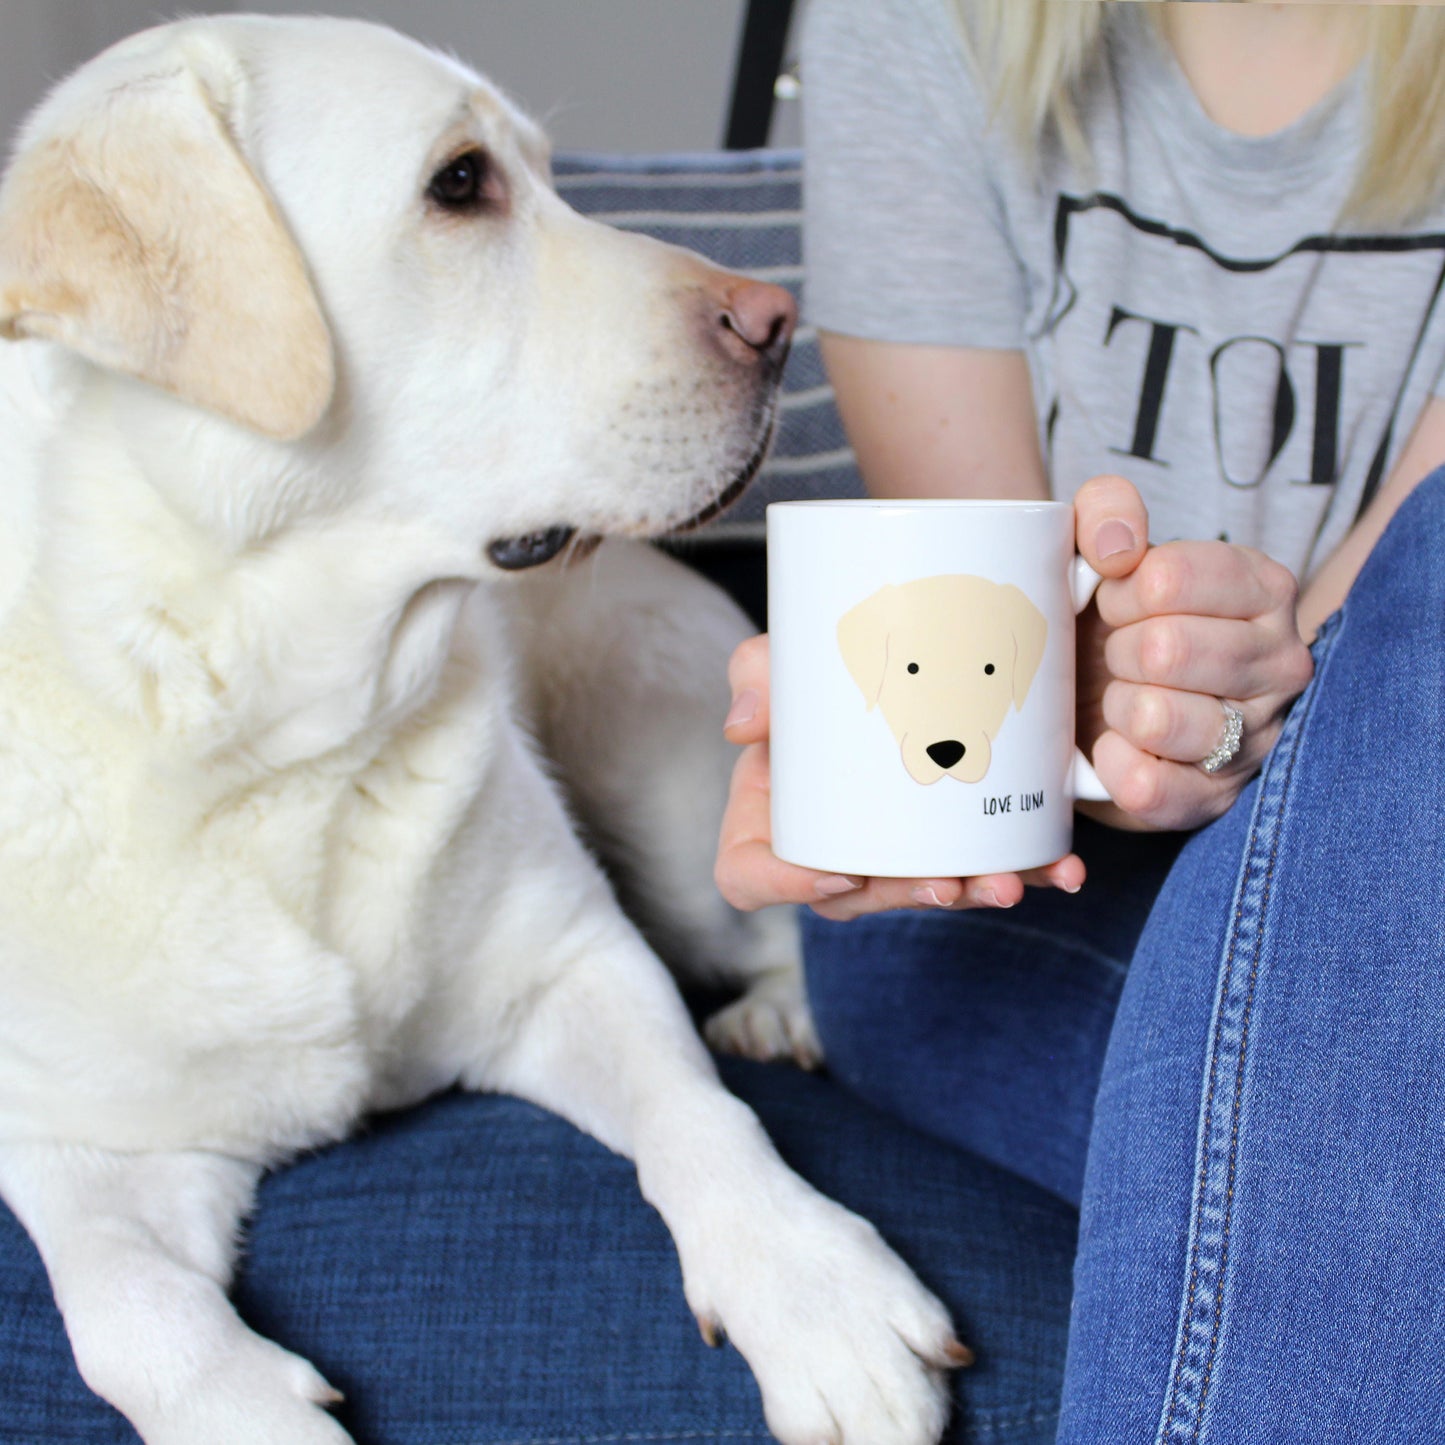 Favourite Human Personalised Dog Mug